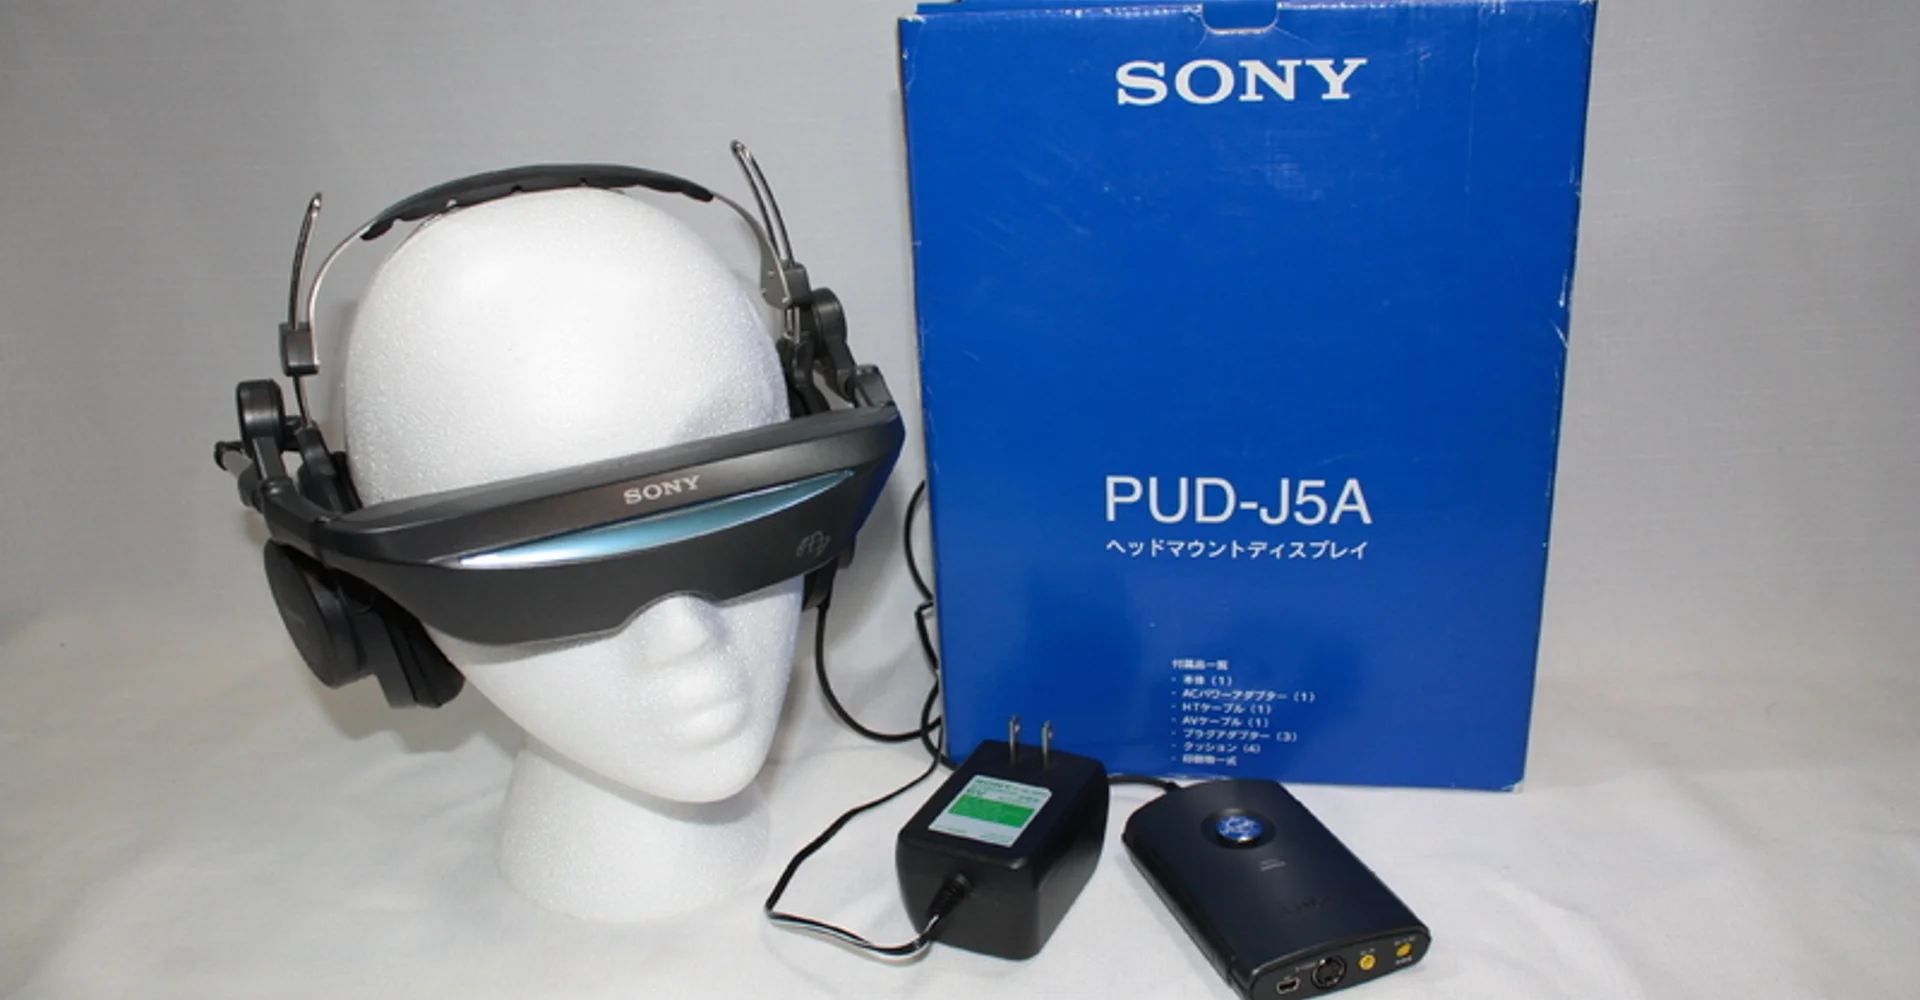  Sony Playstation 2 VR Headset PUD-J5A